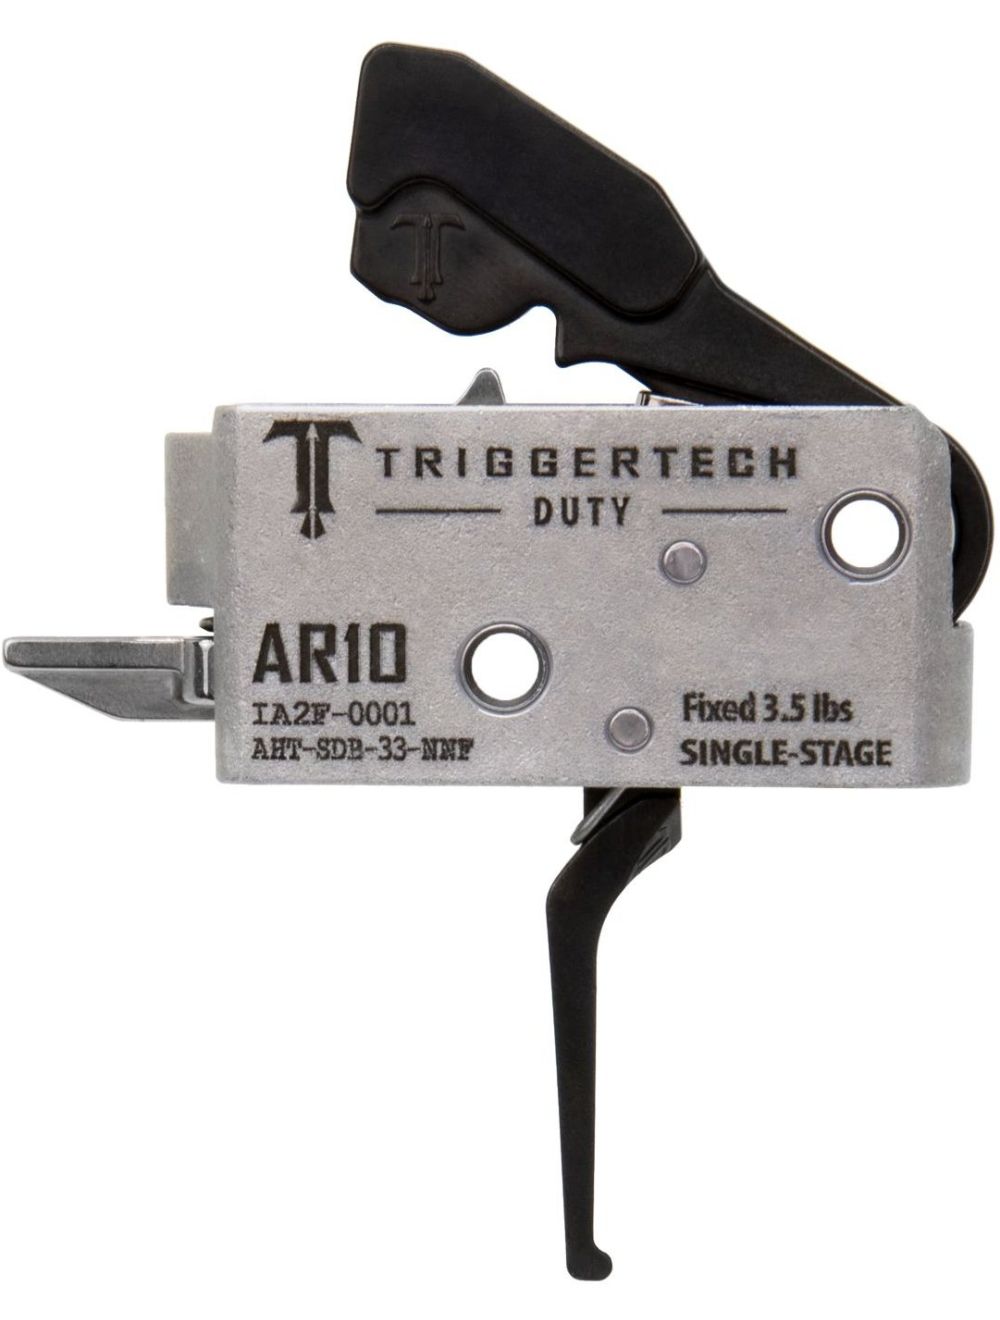 AR10 Single-Stage Trigger